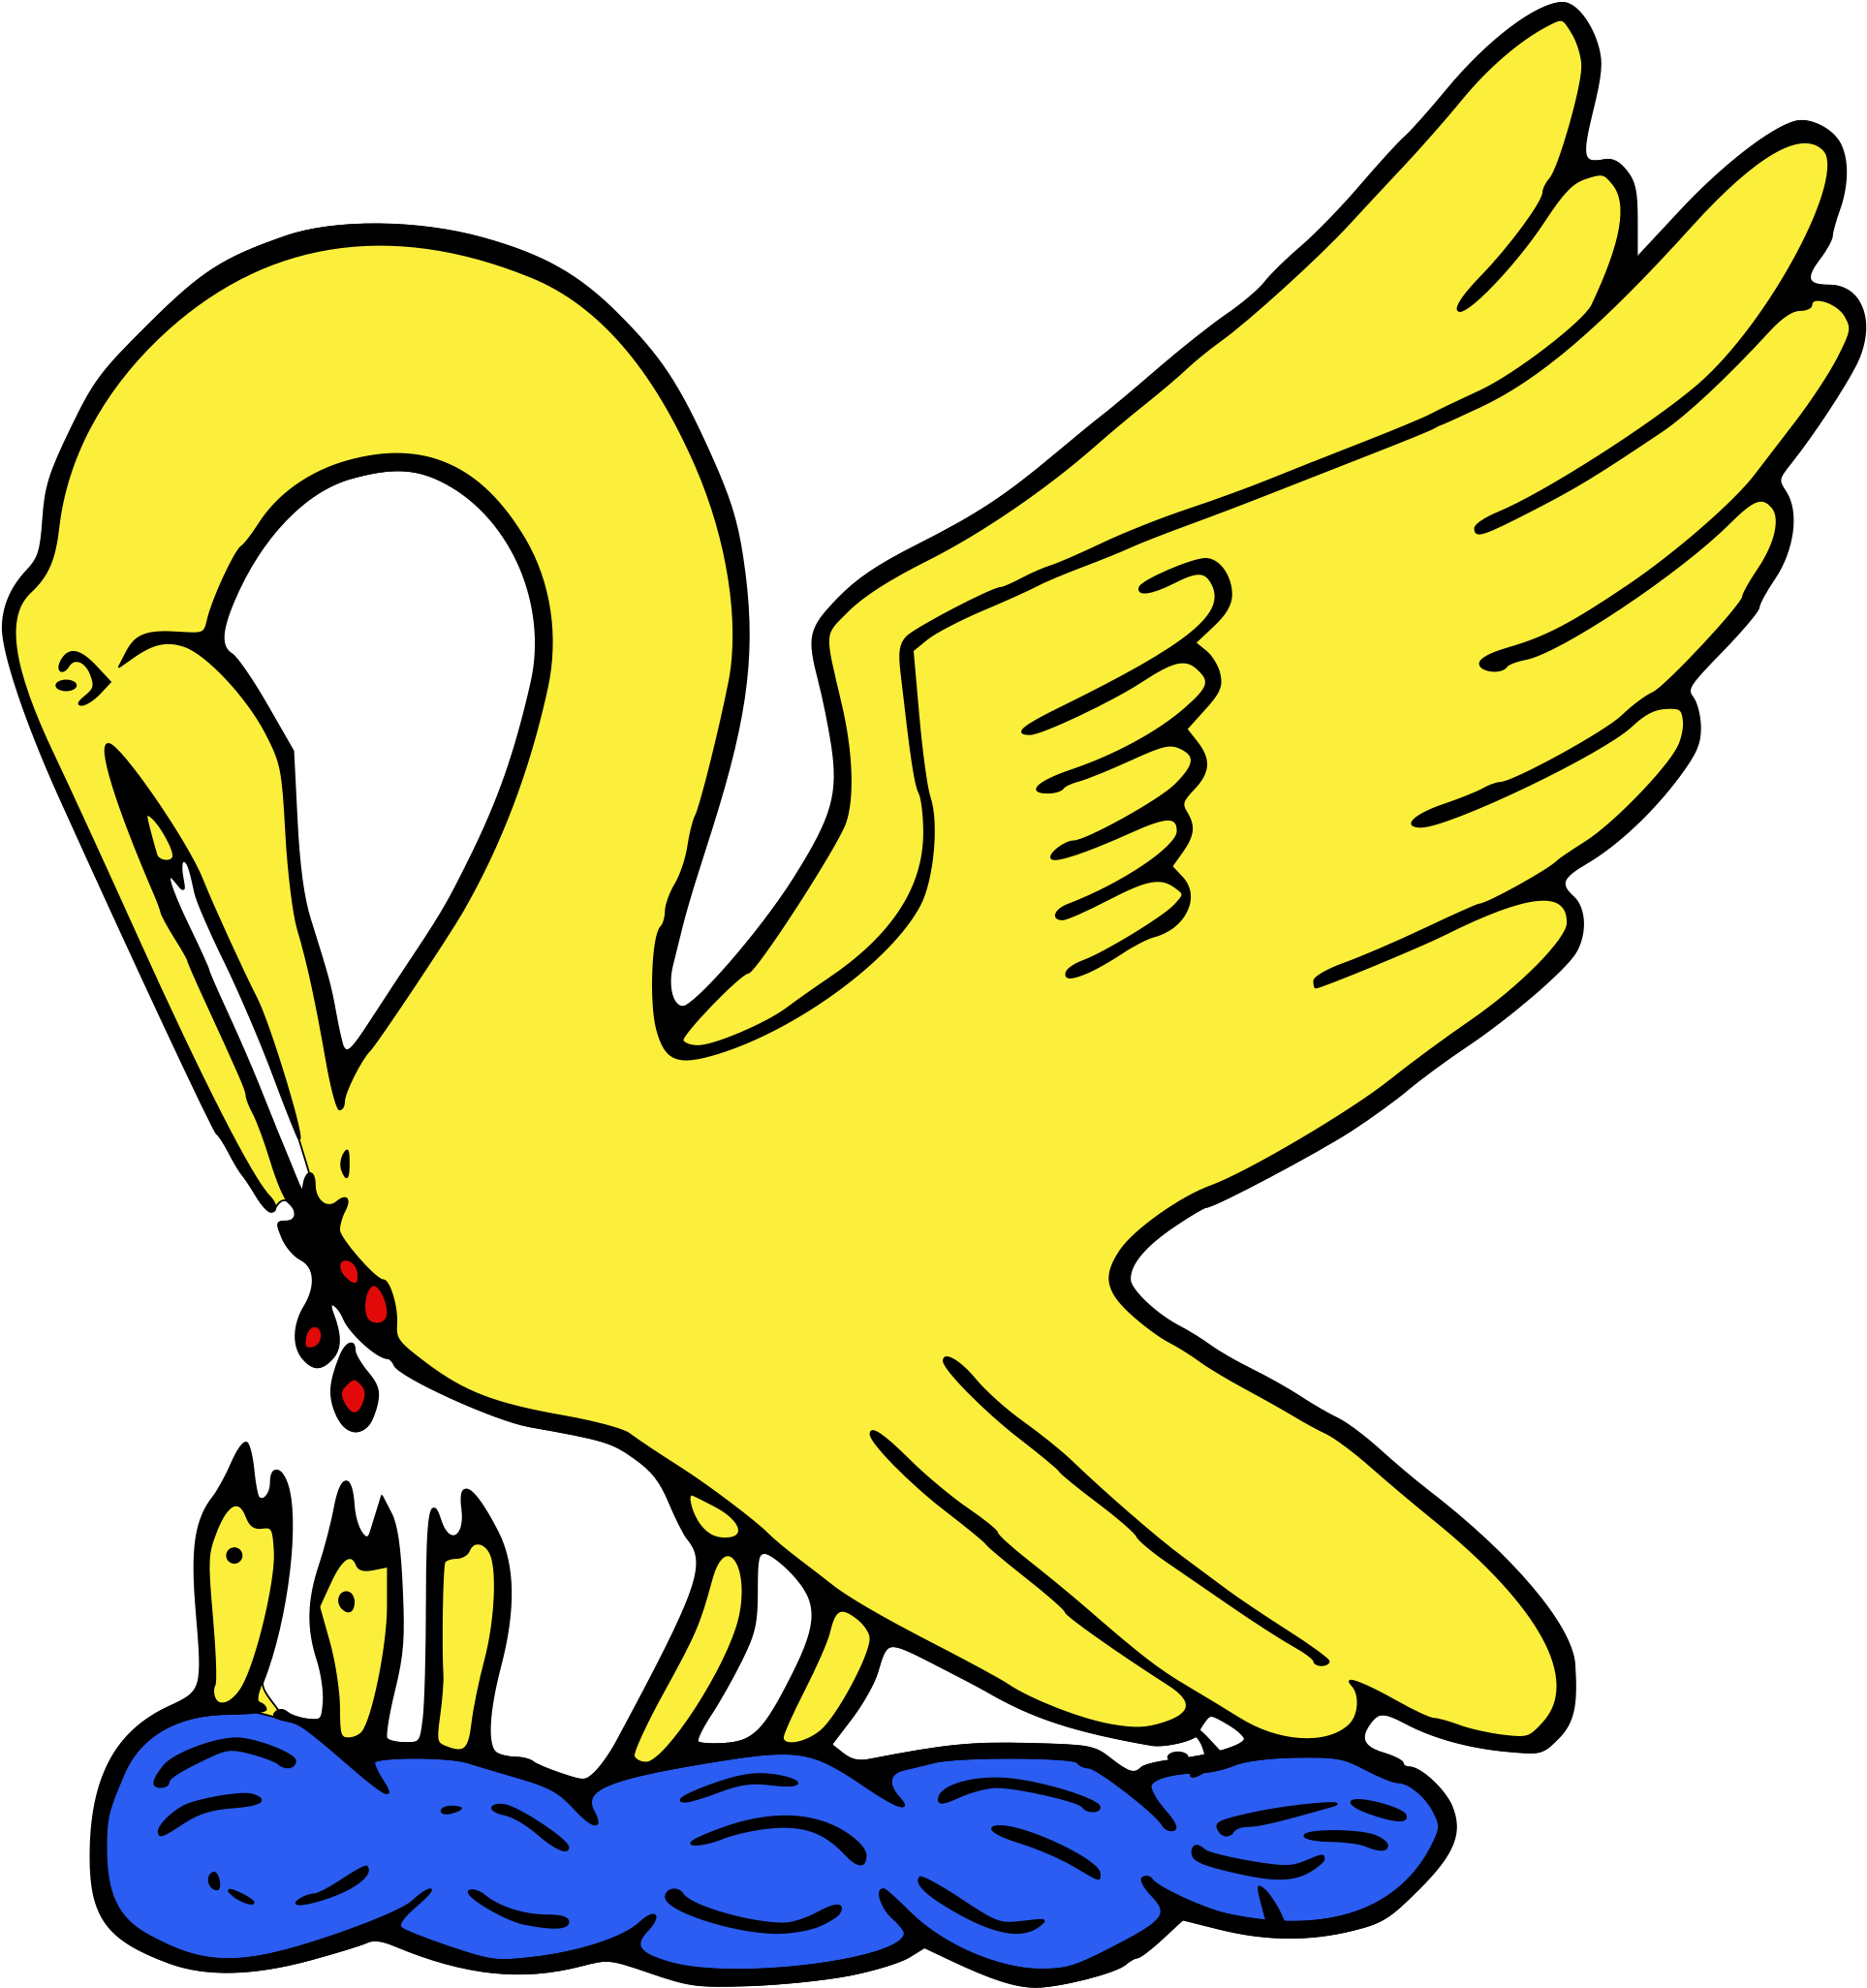 A Yellow Bird With Its Beak Open